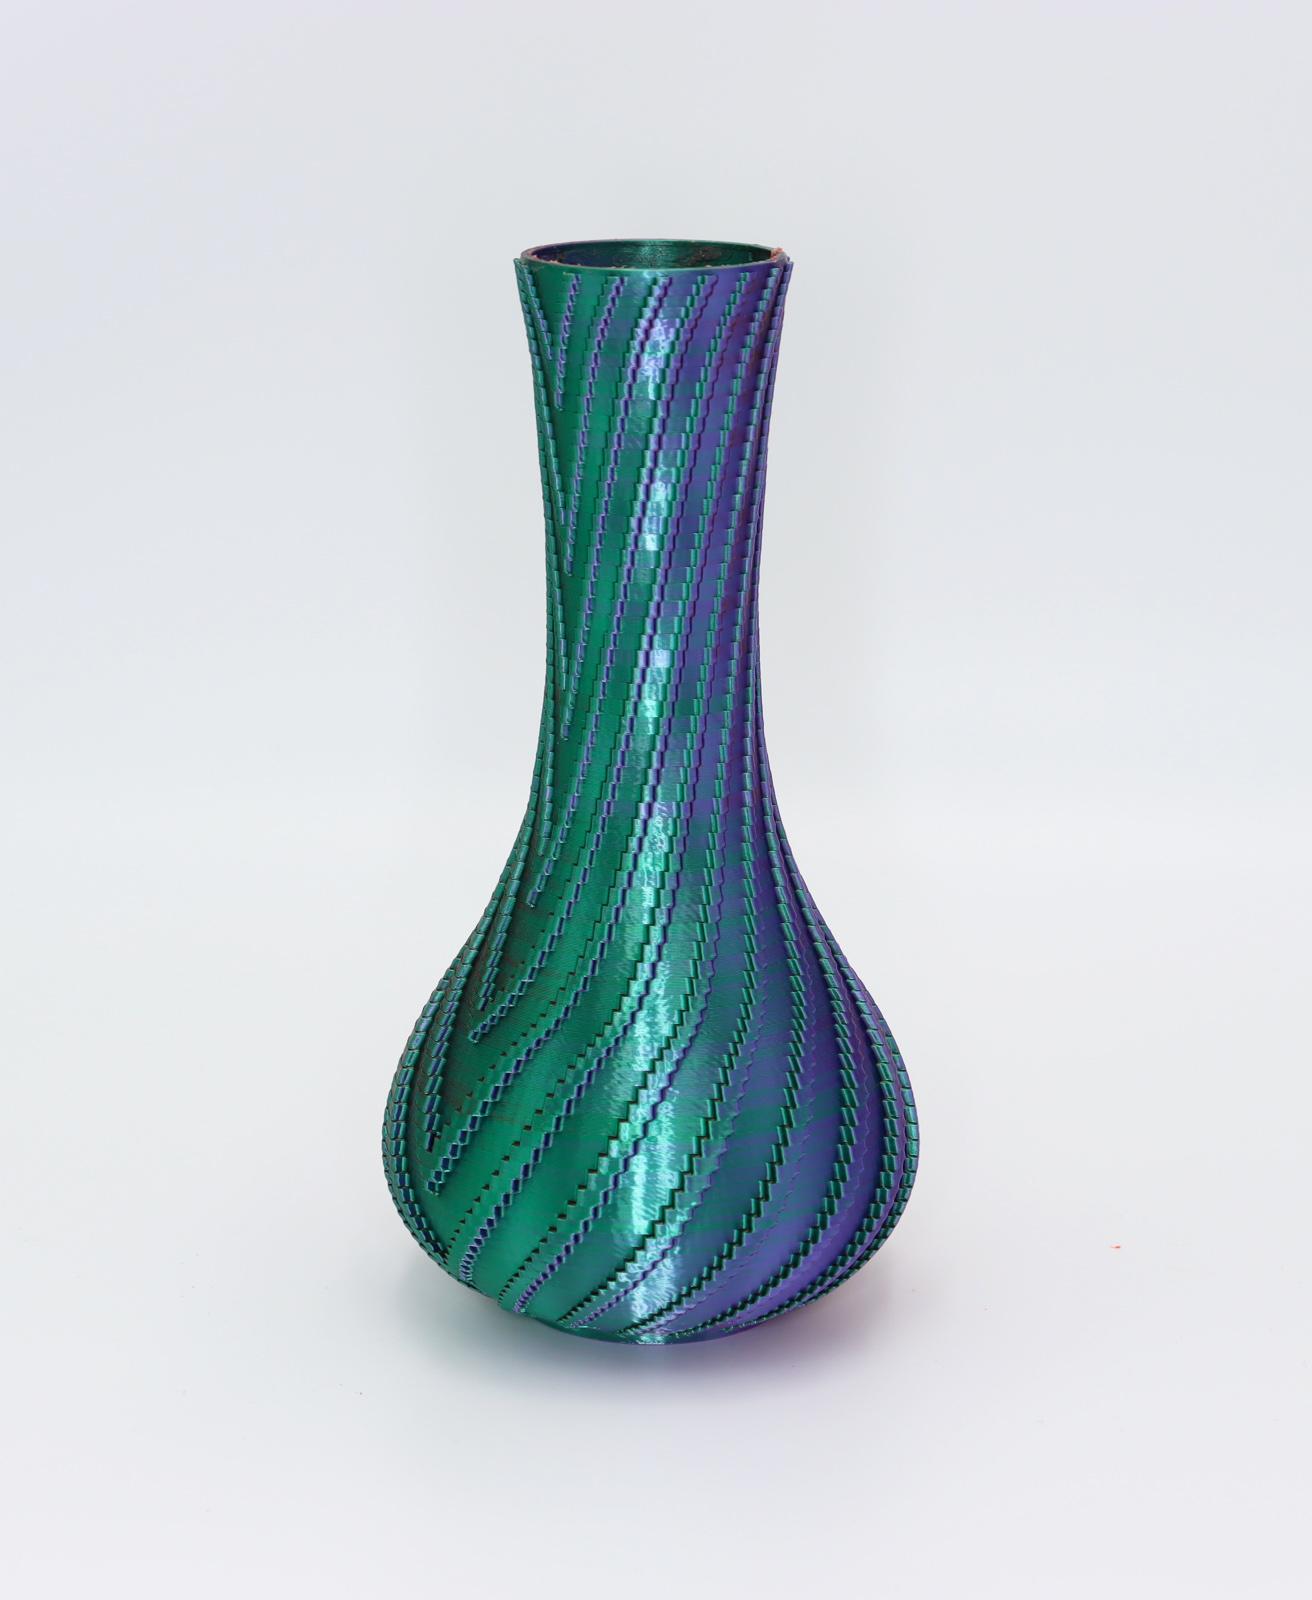 Vase pack 002 3d model